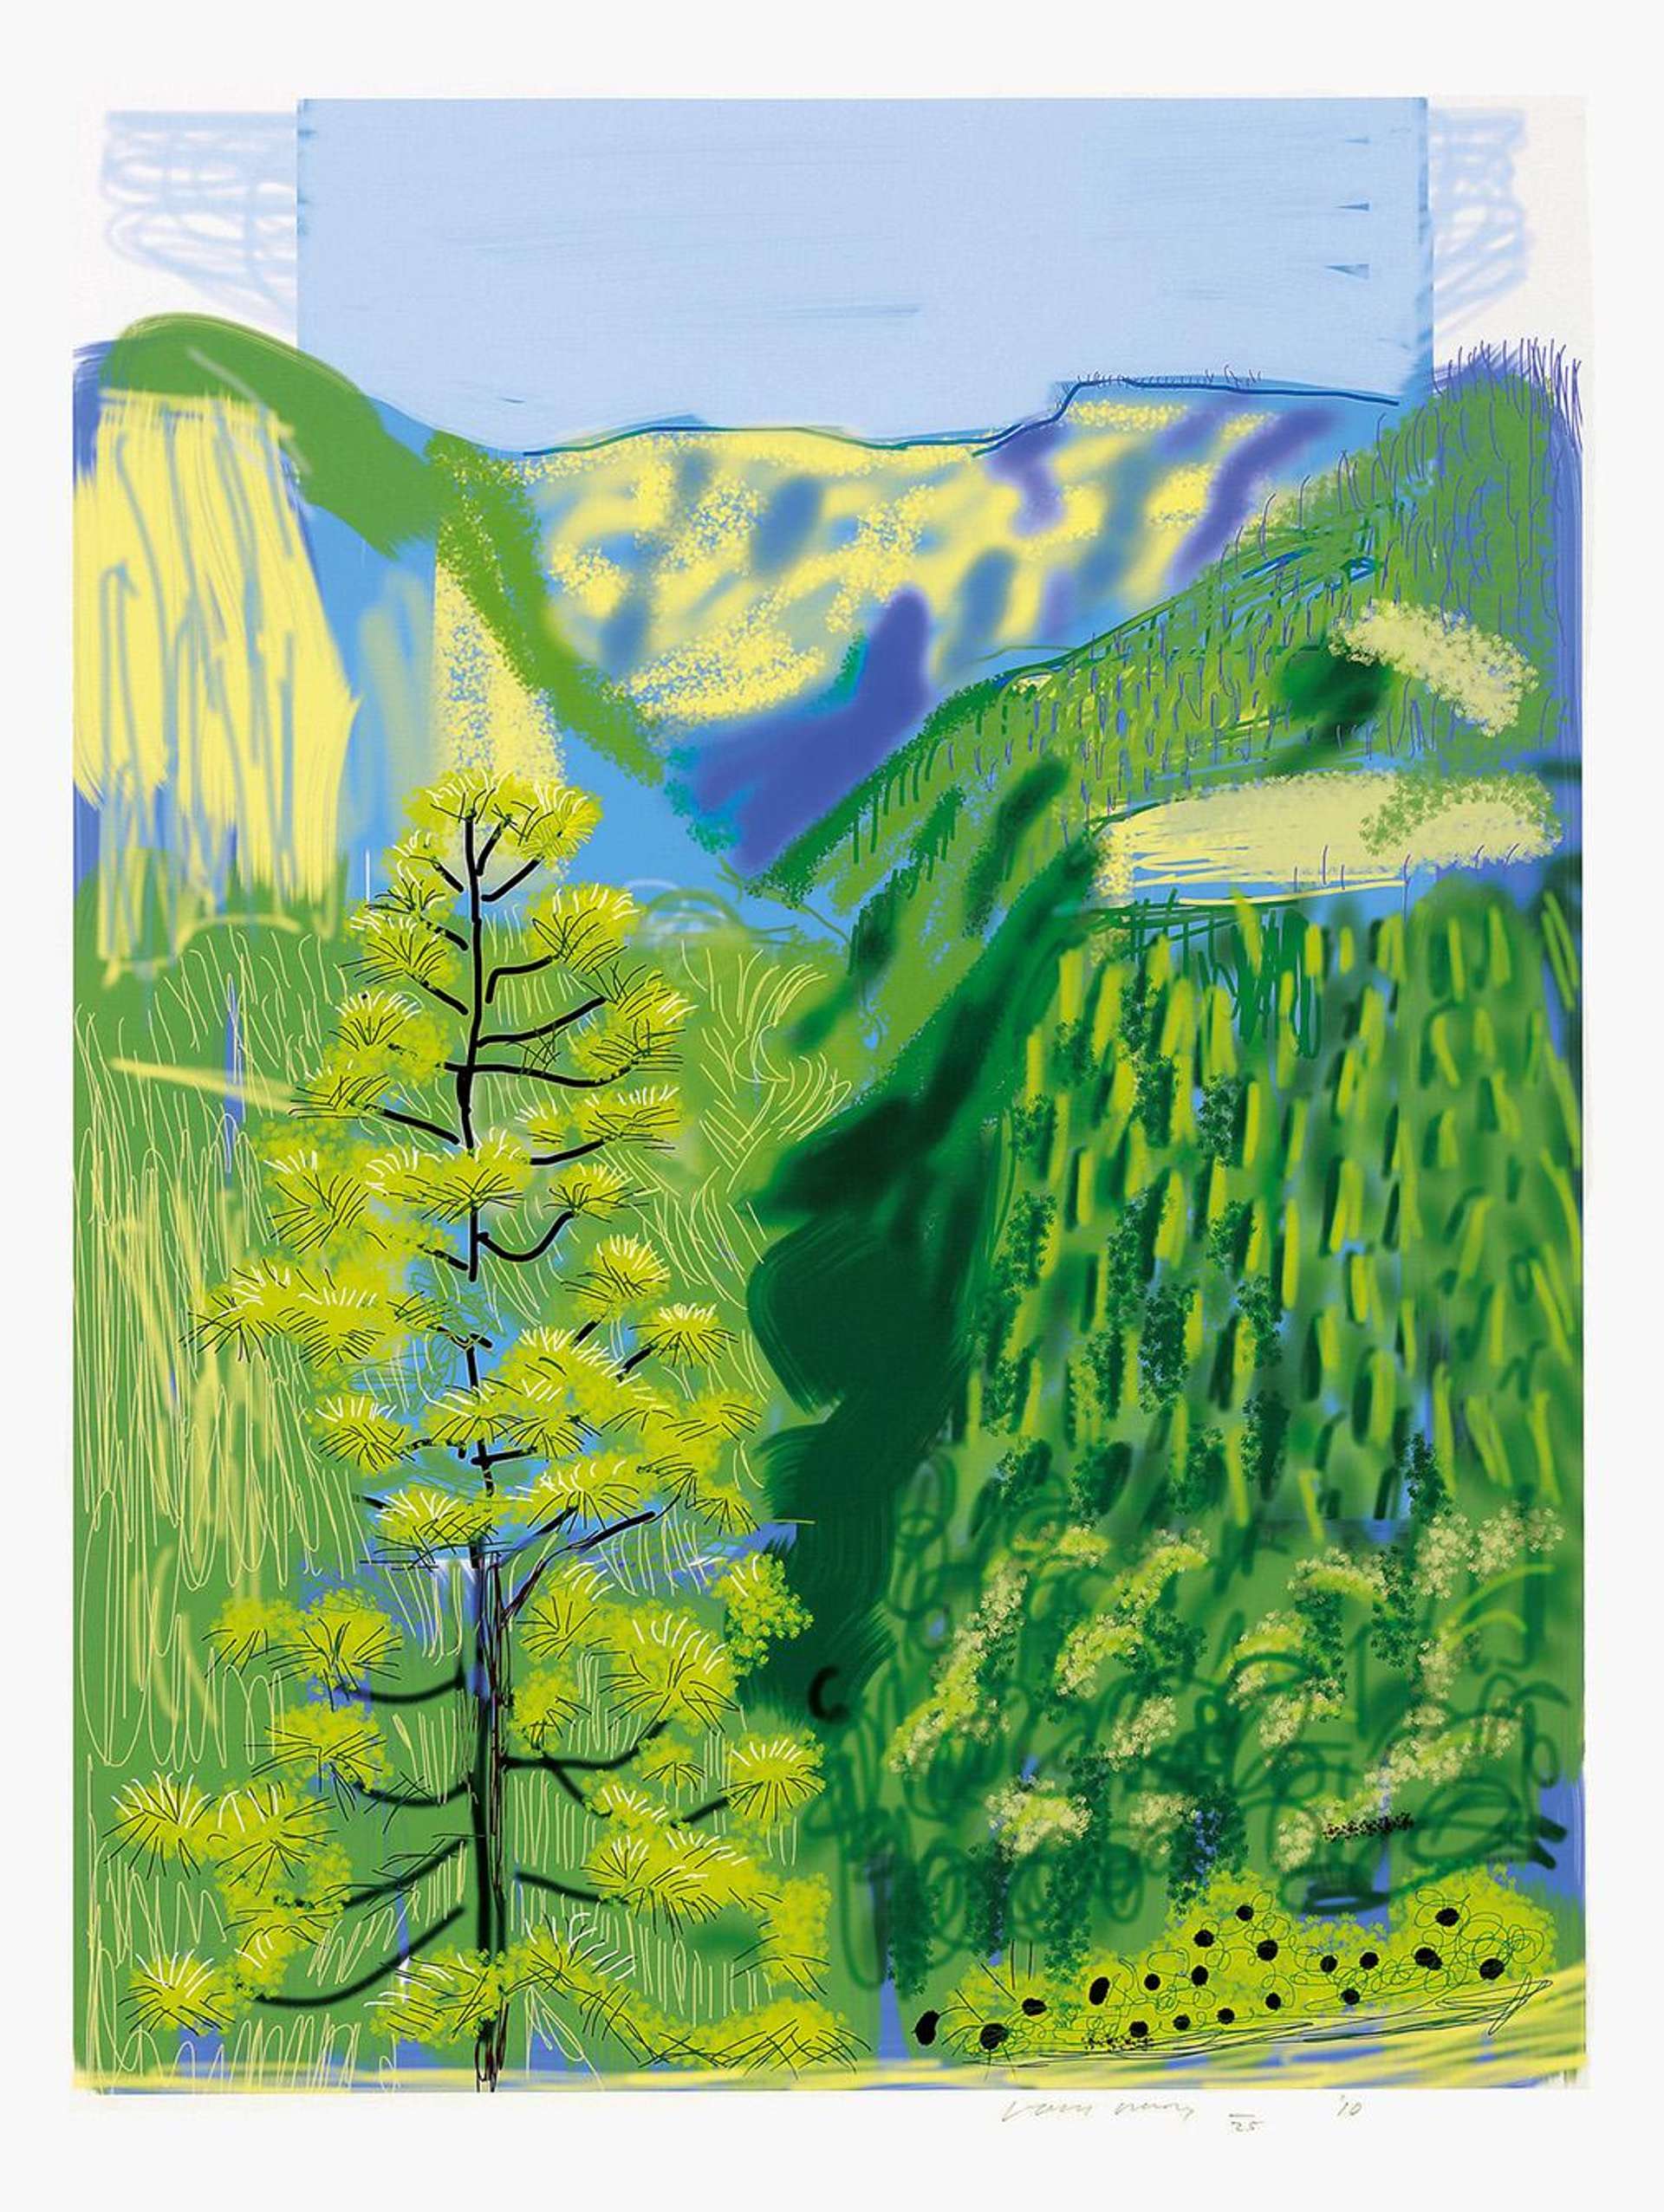 The Yosemite Suite 20 - Signed Print by David Hockney 2010 - MyArtBroker